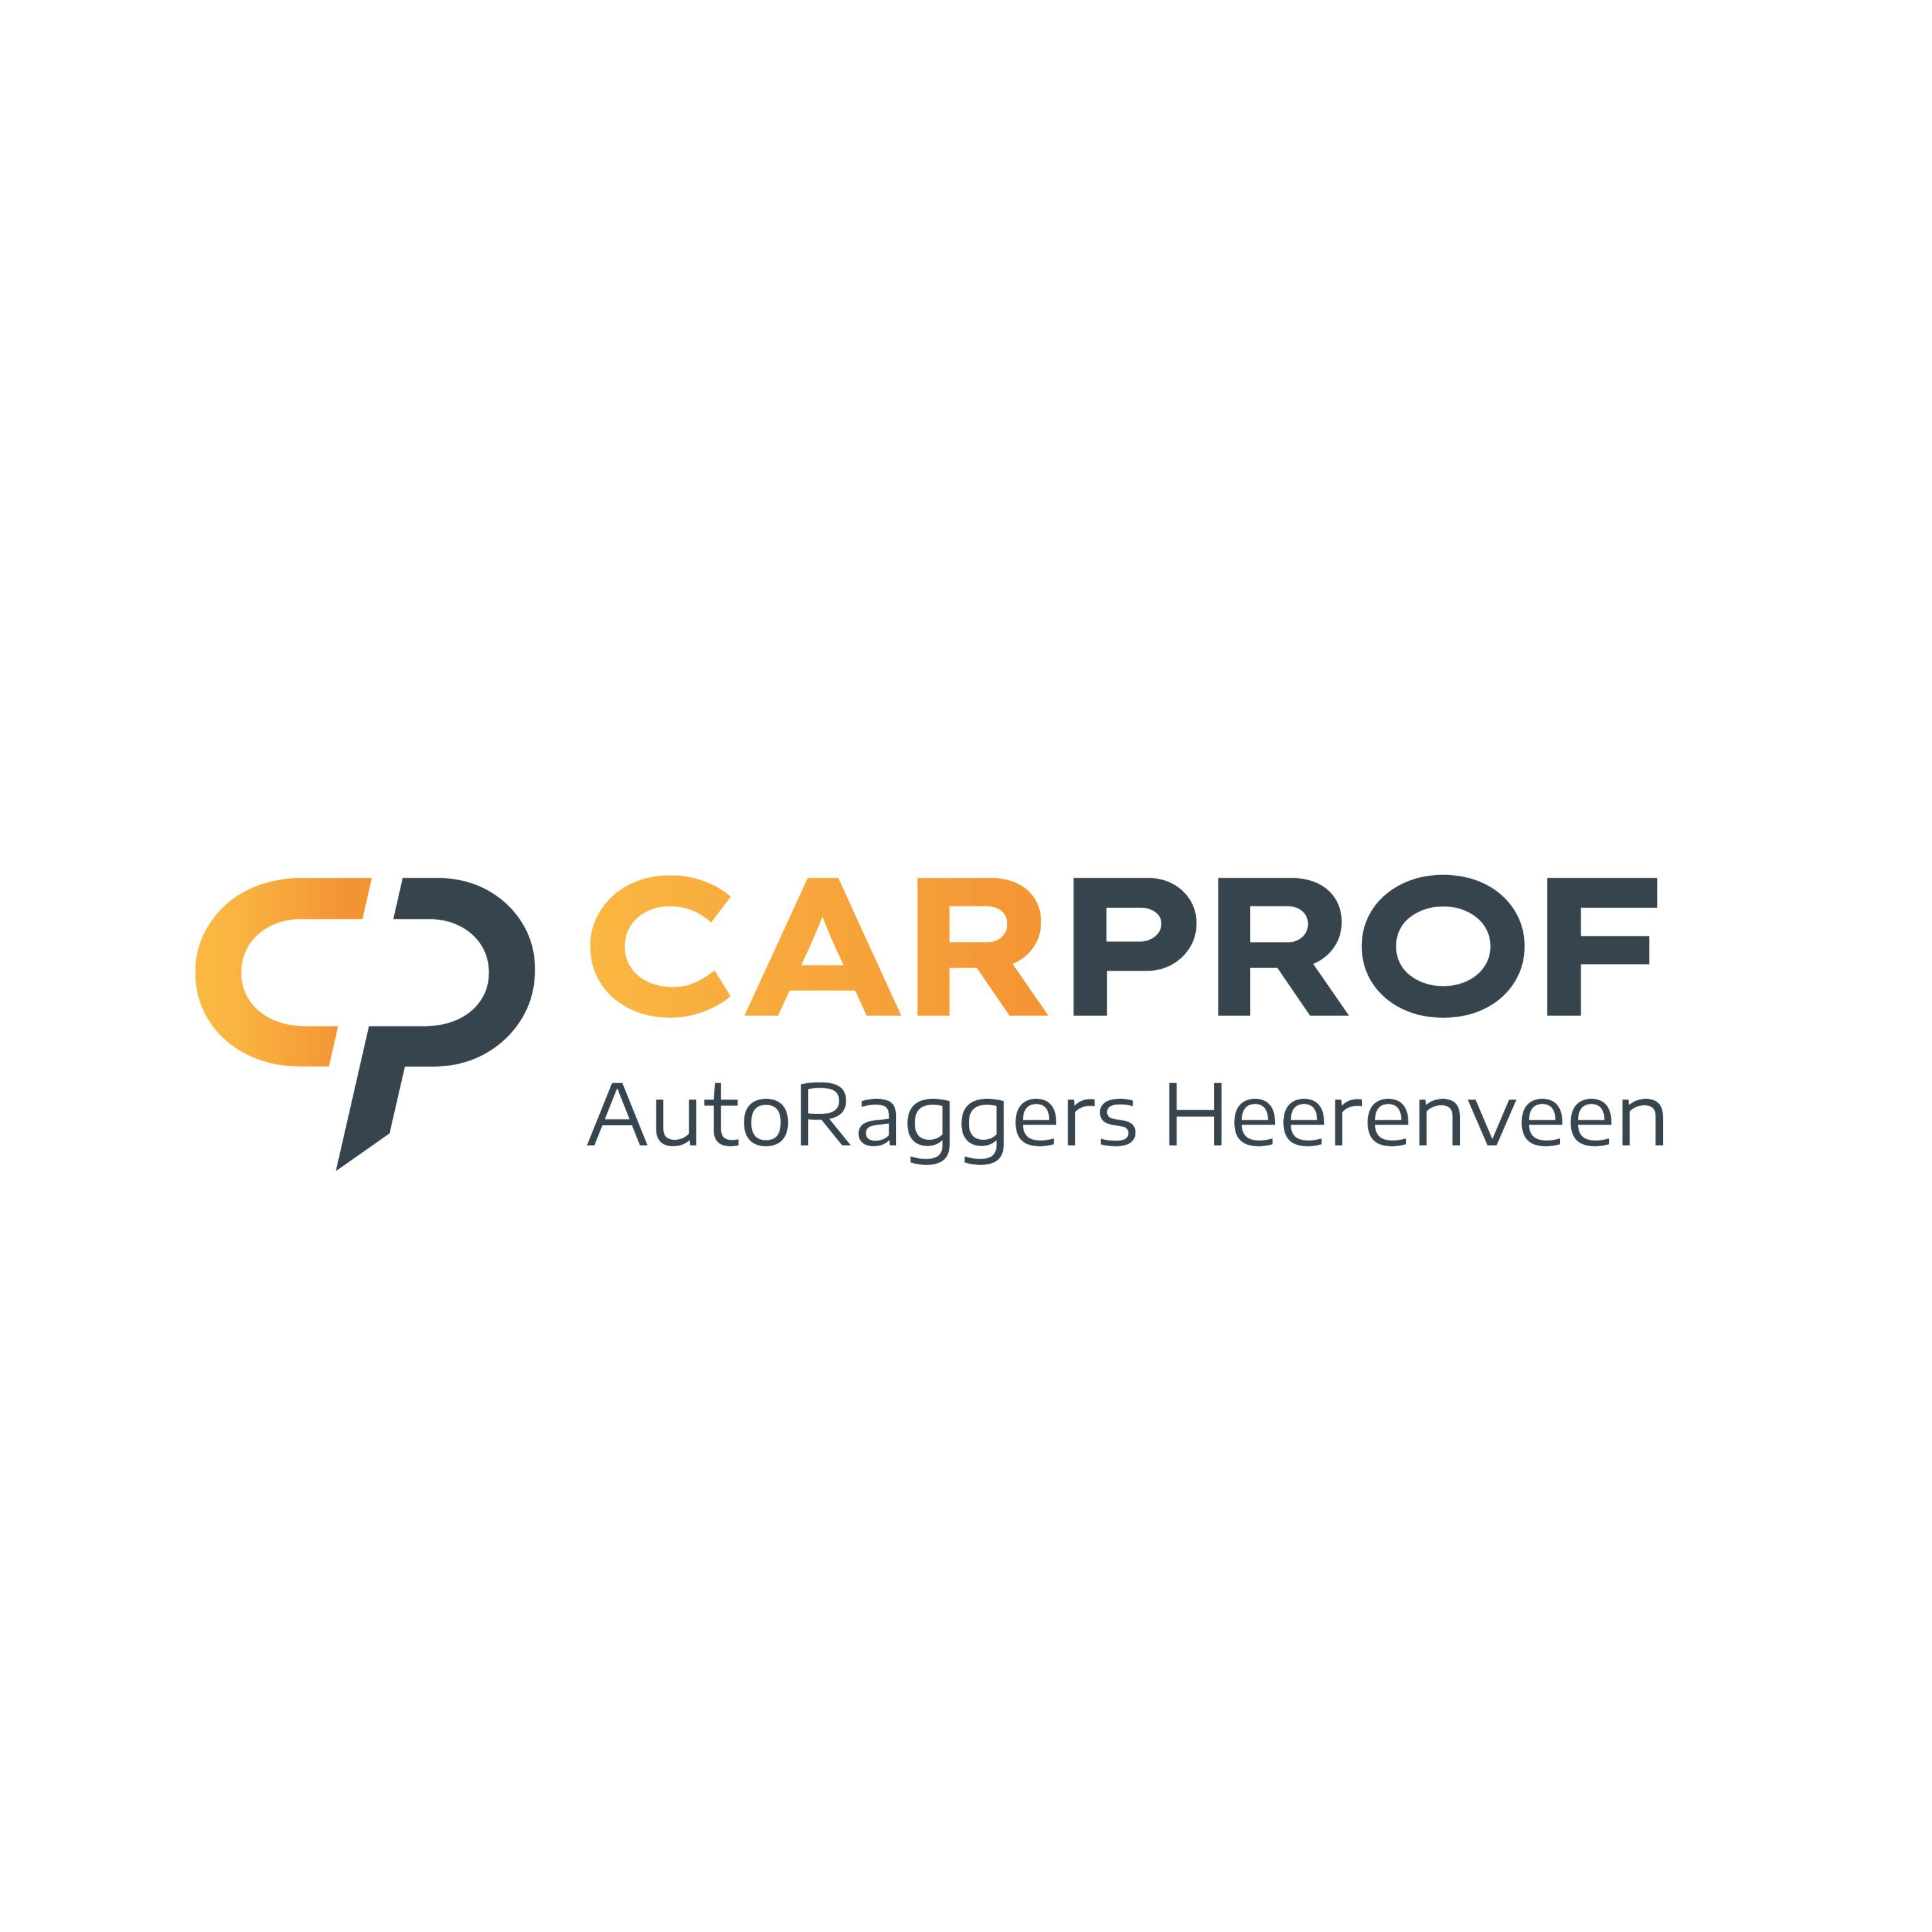 AutoRaggers Heerenveen | CarProf | Mitsubishi Dealer | NexDrive Center Logo